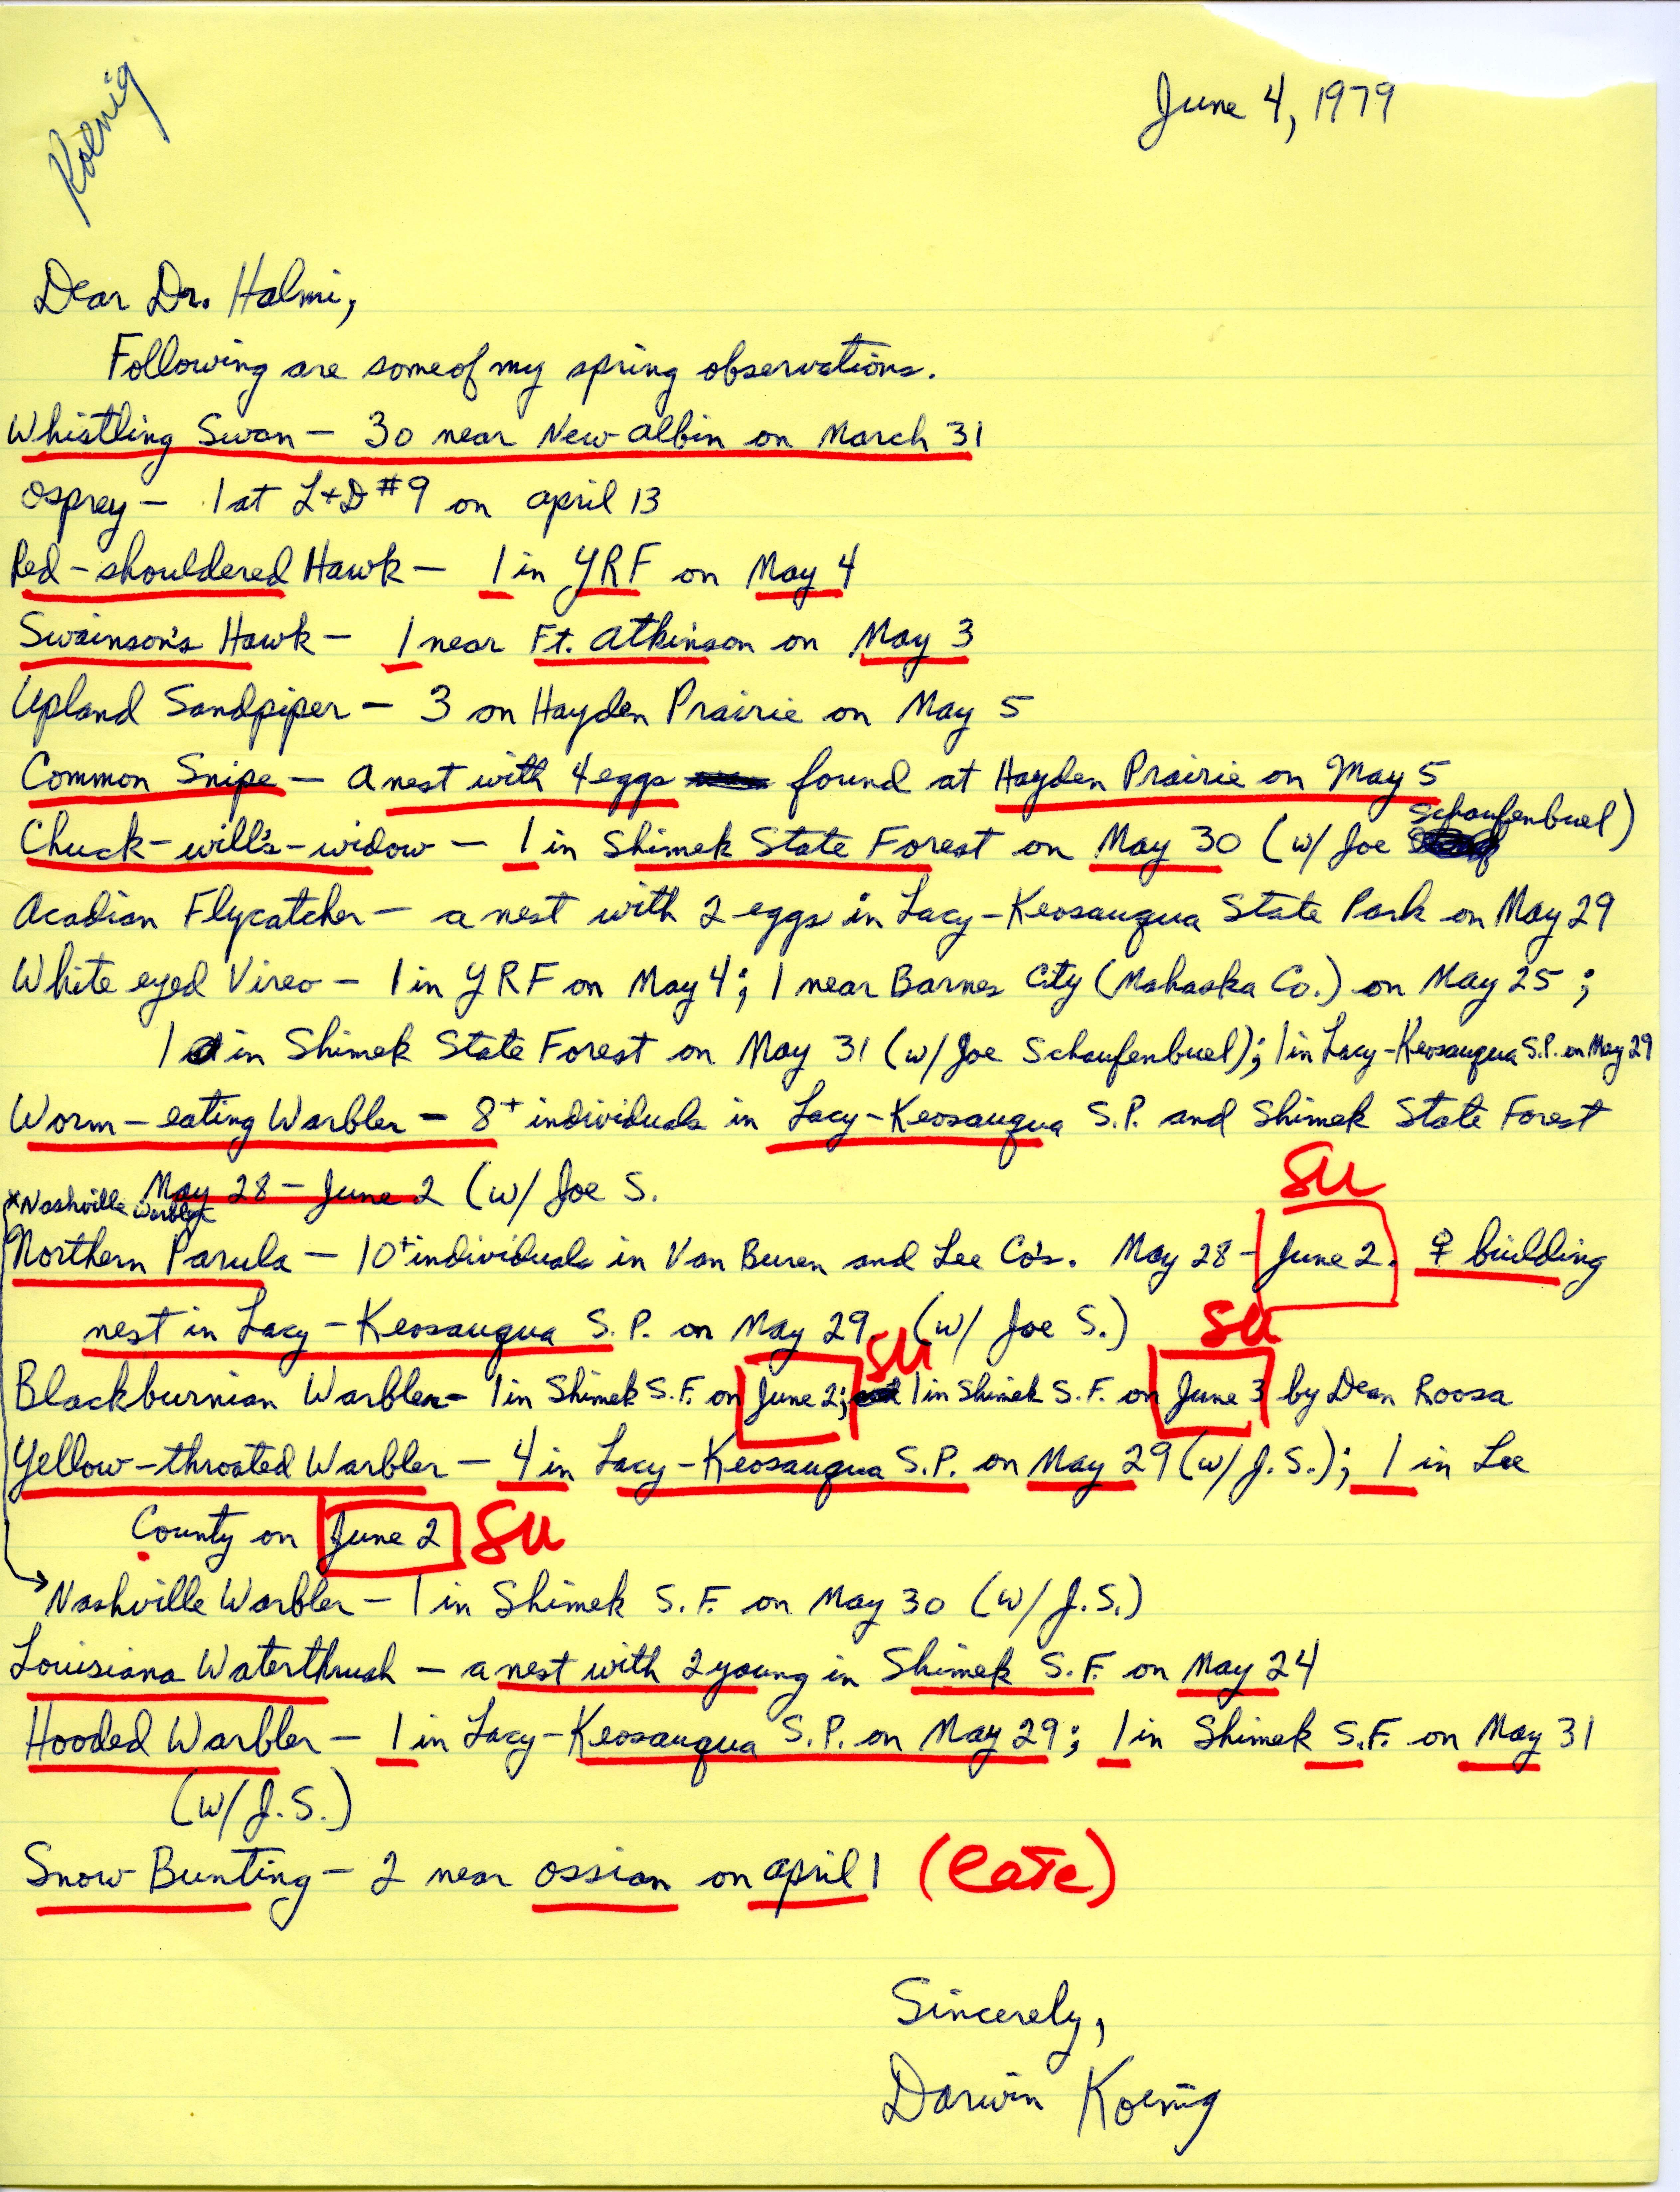 Darwin Koenig letter to Nicholas S. Halmi regarding spring bird sightings, June 4, 1979